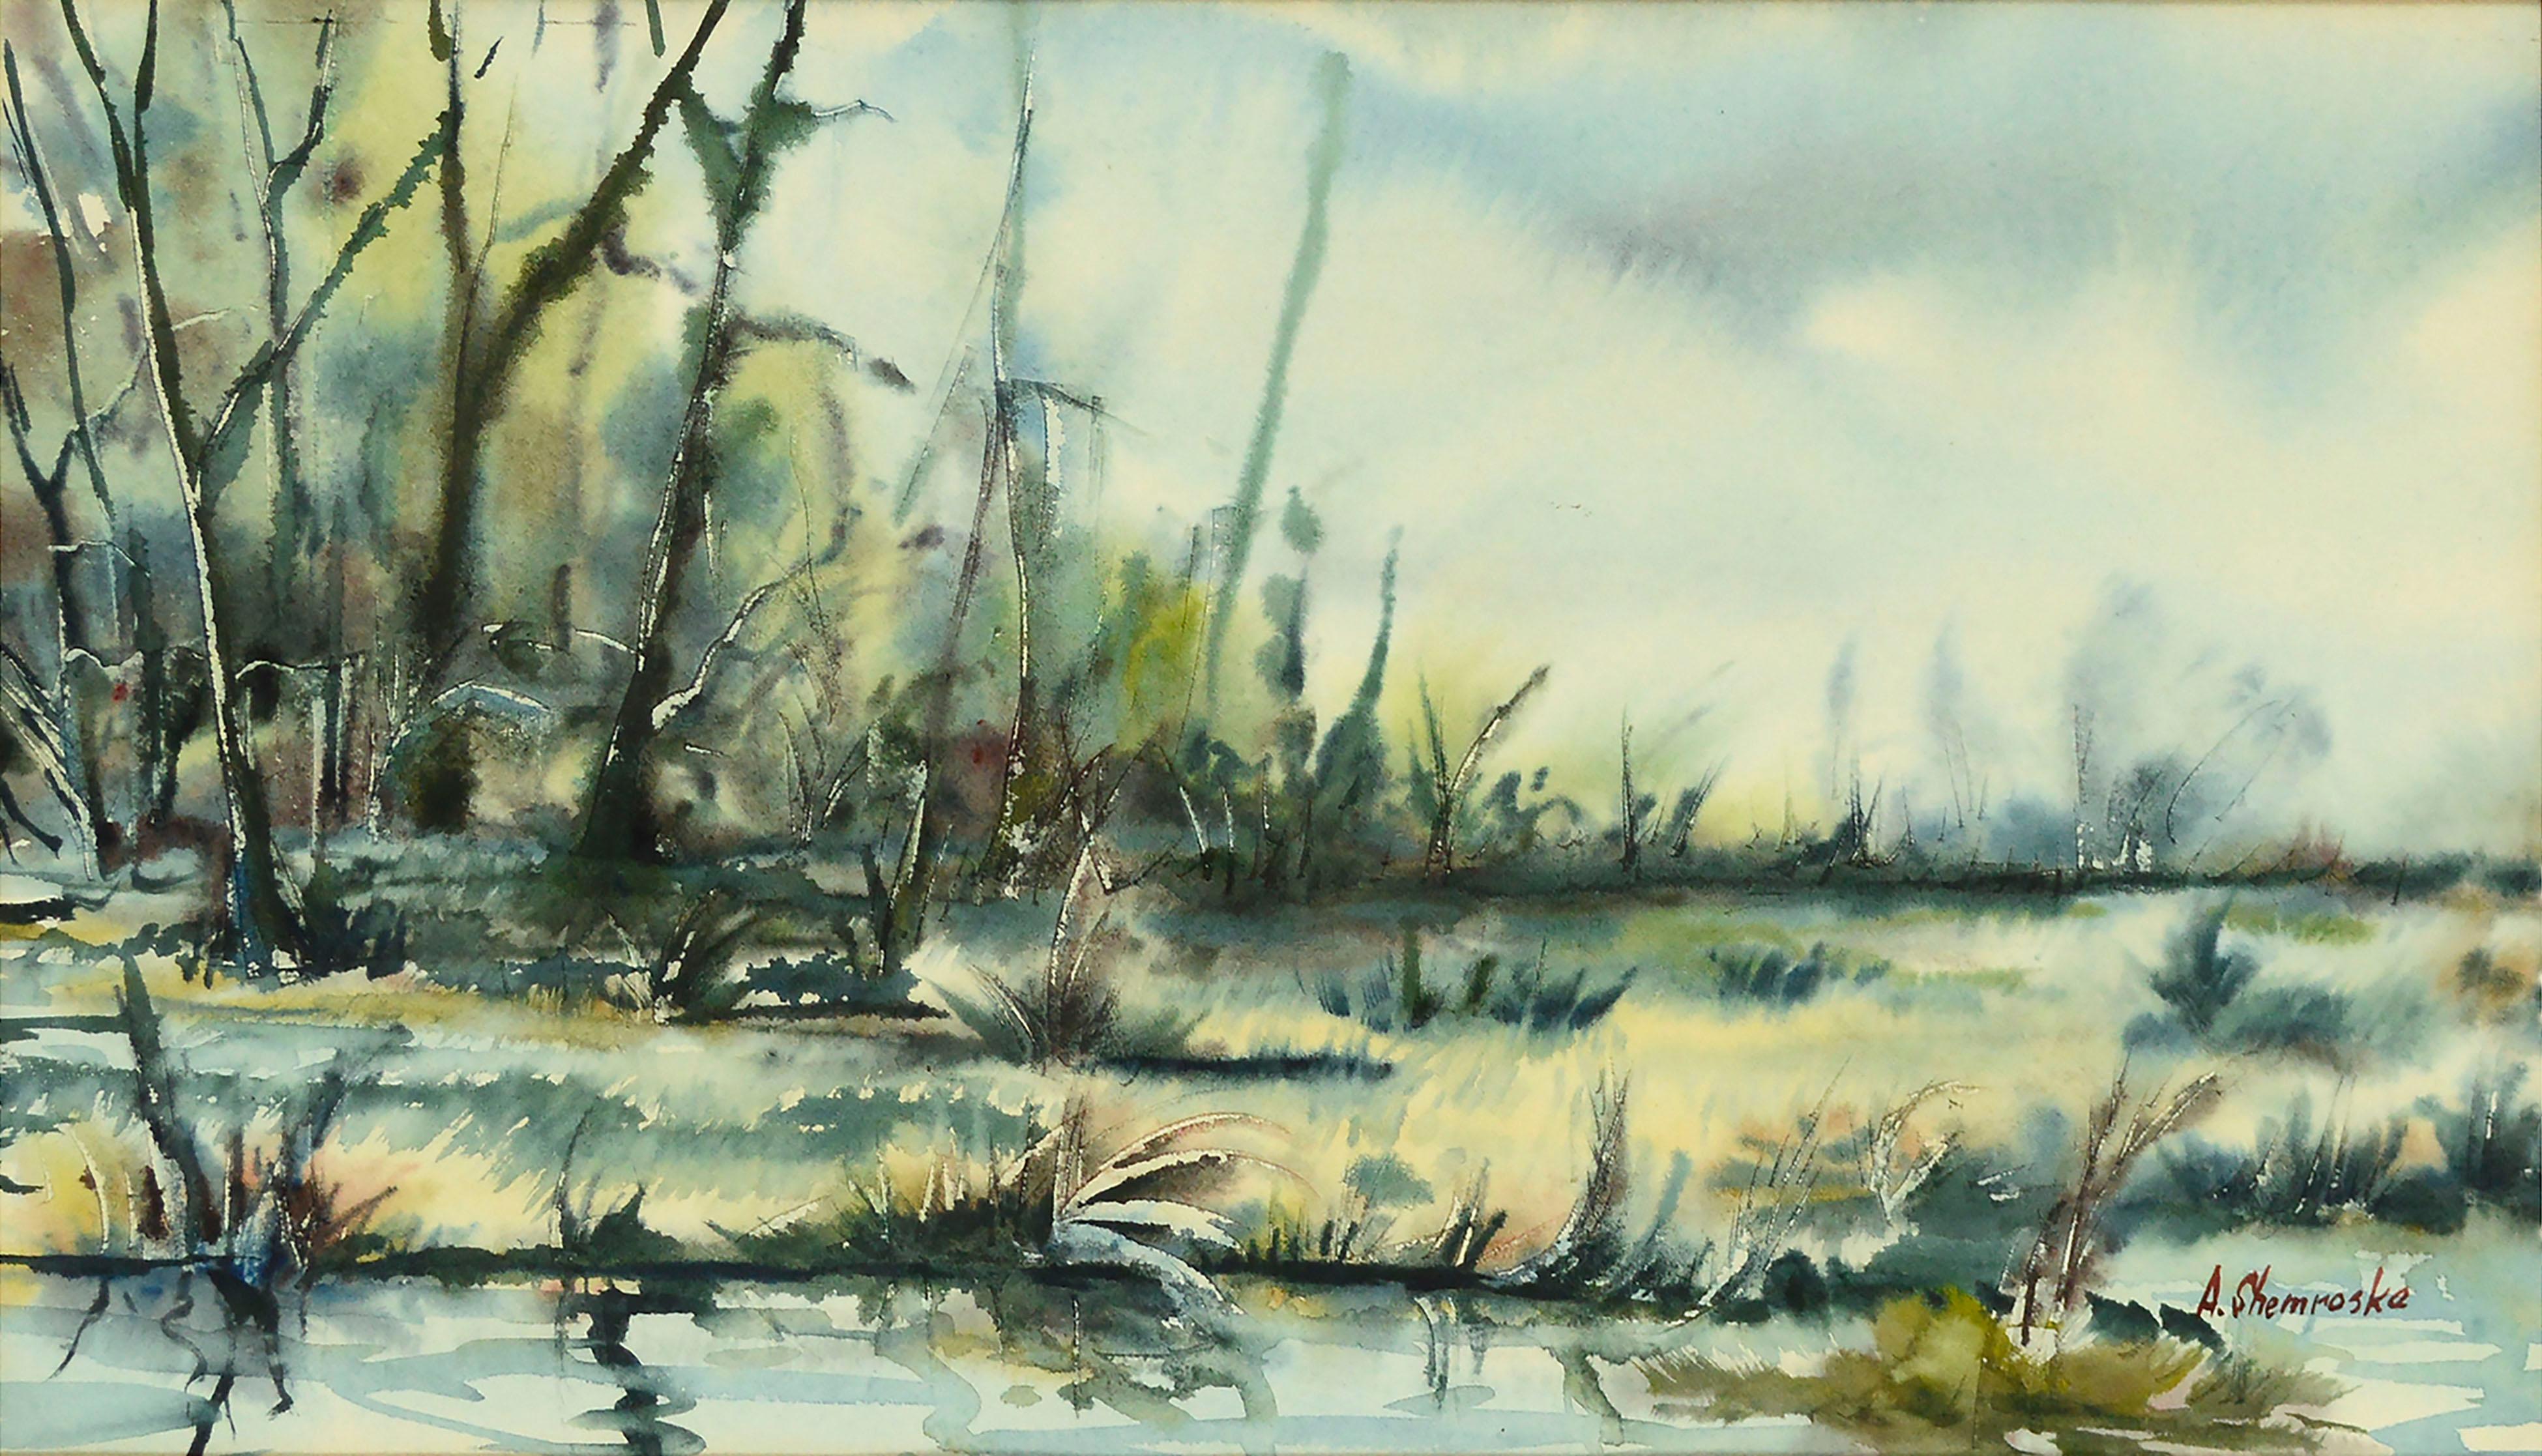 Wetland Trees Reflections, Mid Century Landscape Watercolor  - Art by Anthony Shemroske